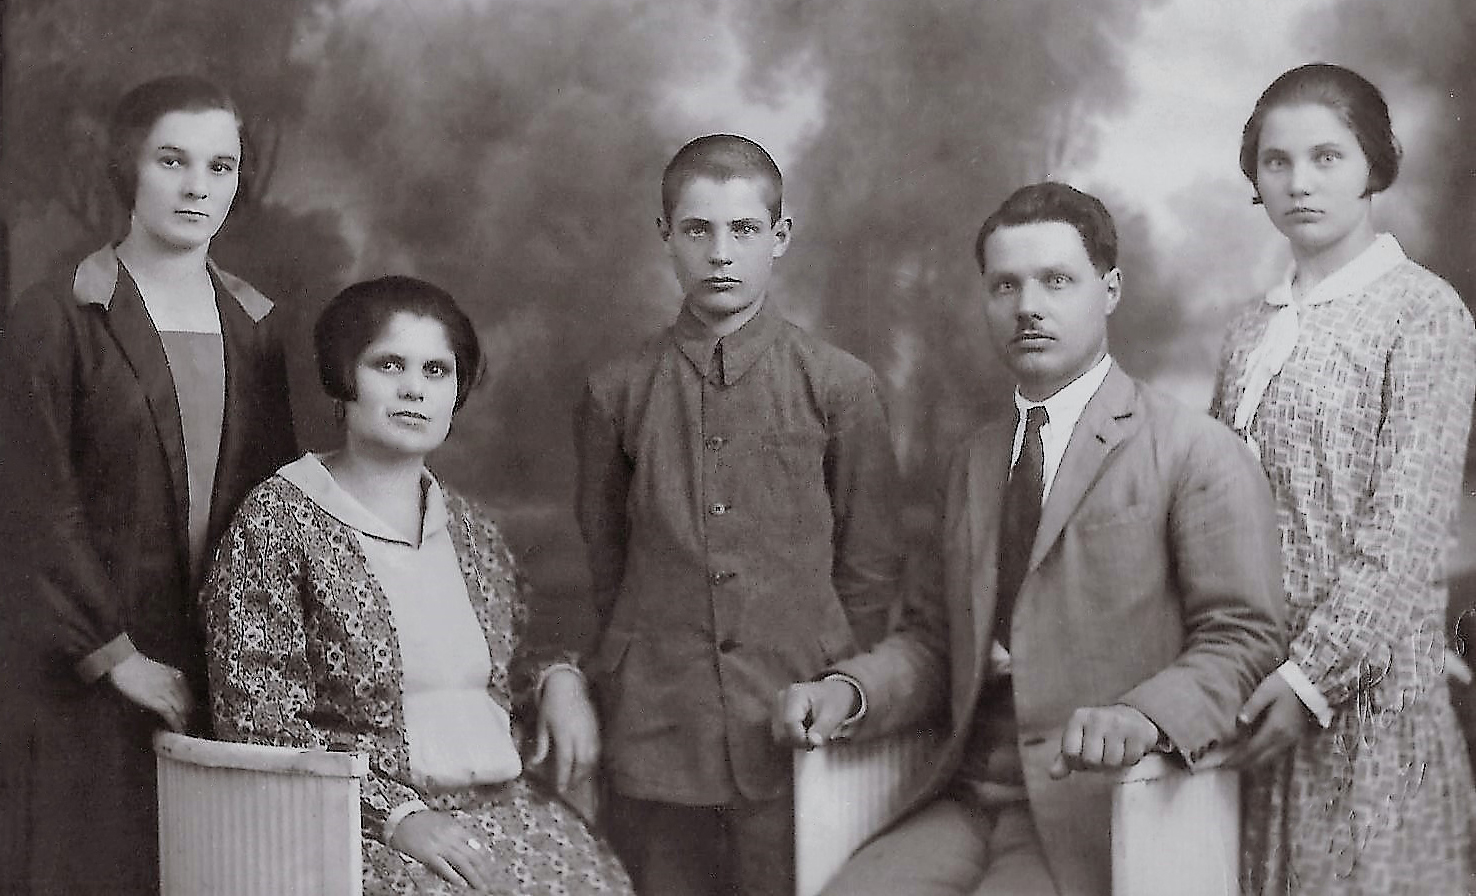   Nichita Smochină şi familia. Anii '30. Credit: dr. Vadim Guzun.